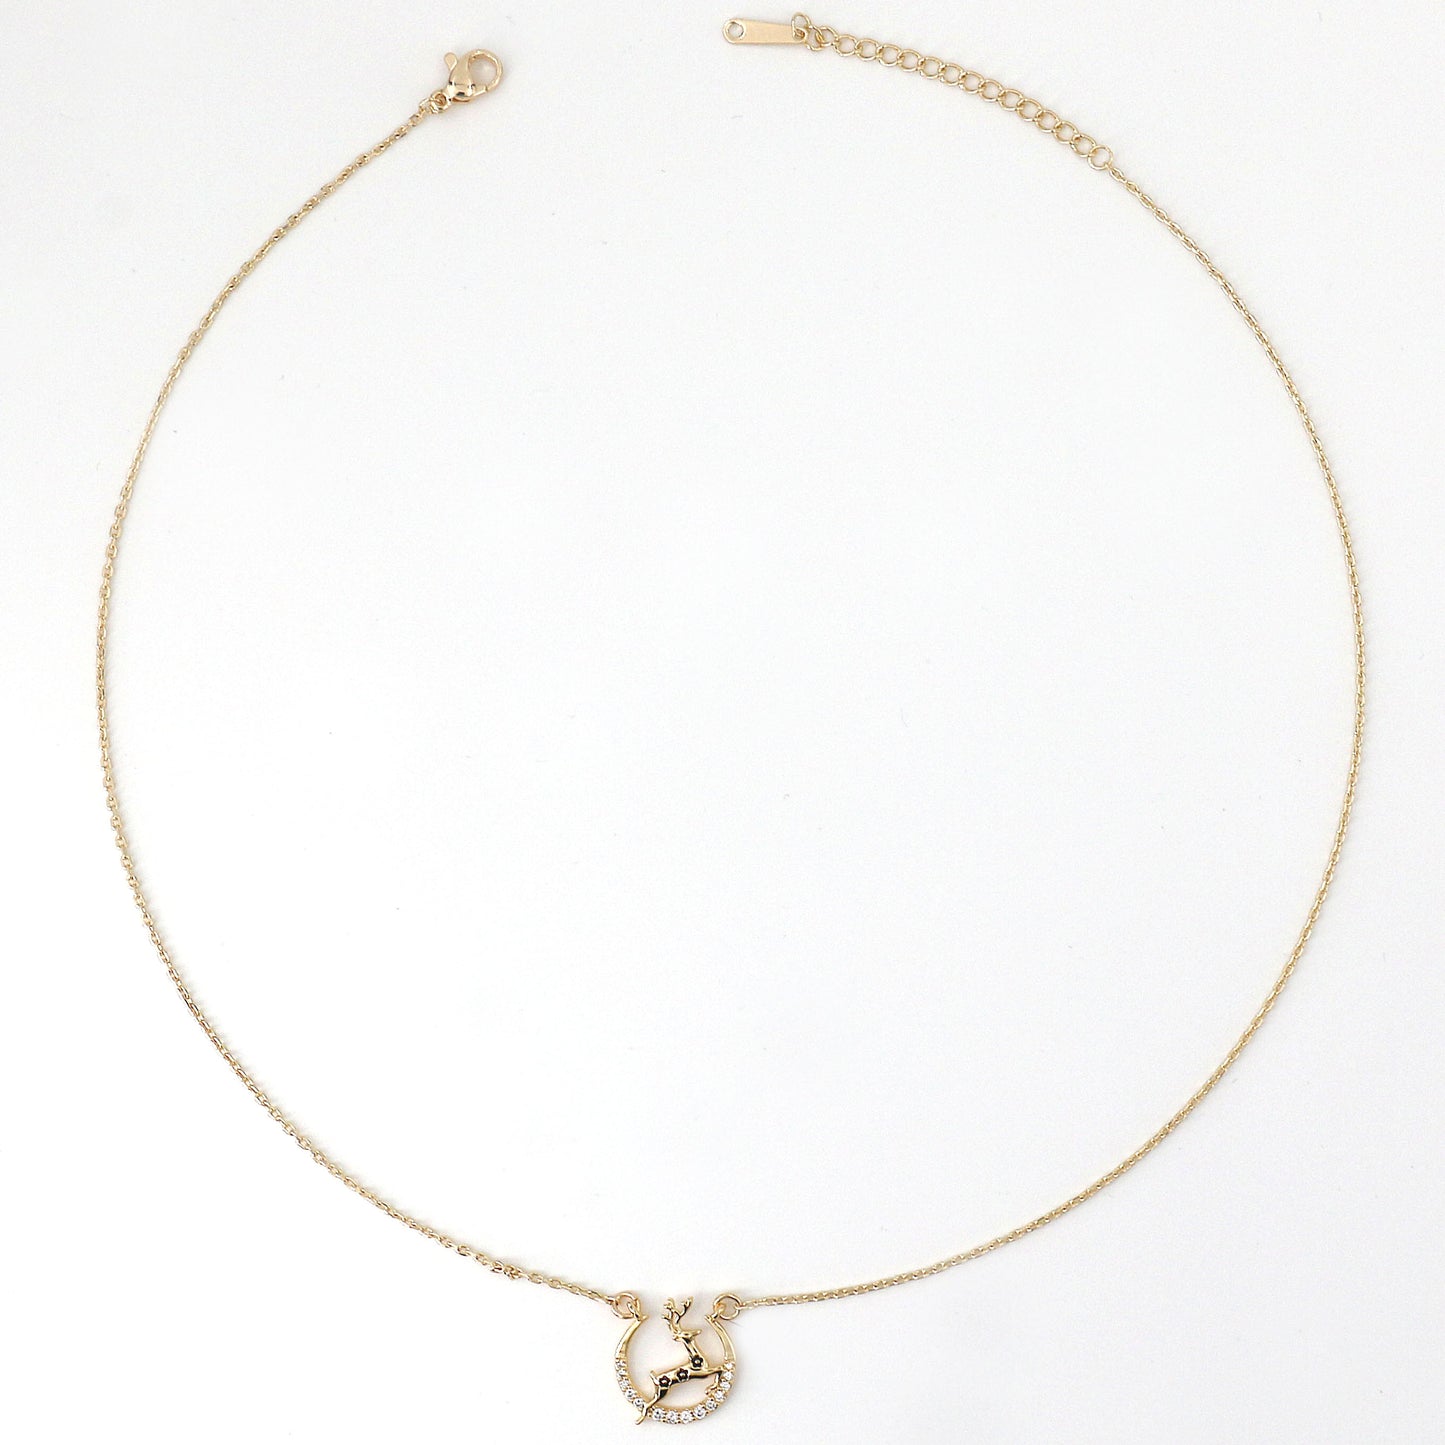 01 Fashion Deer Necklace